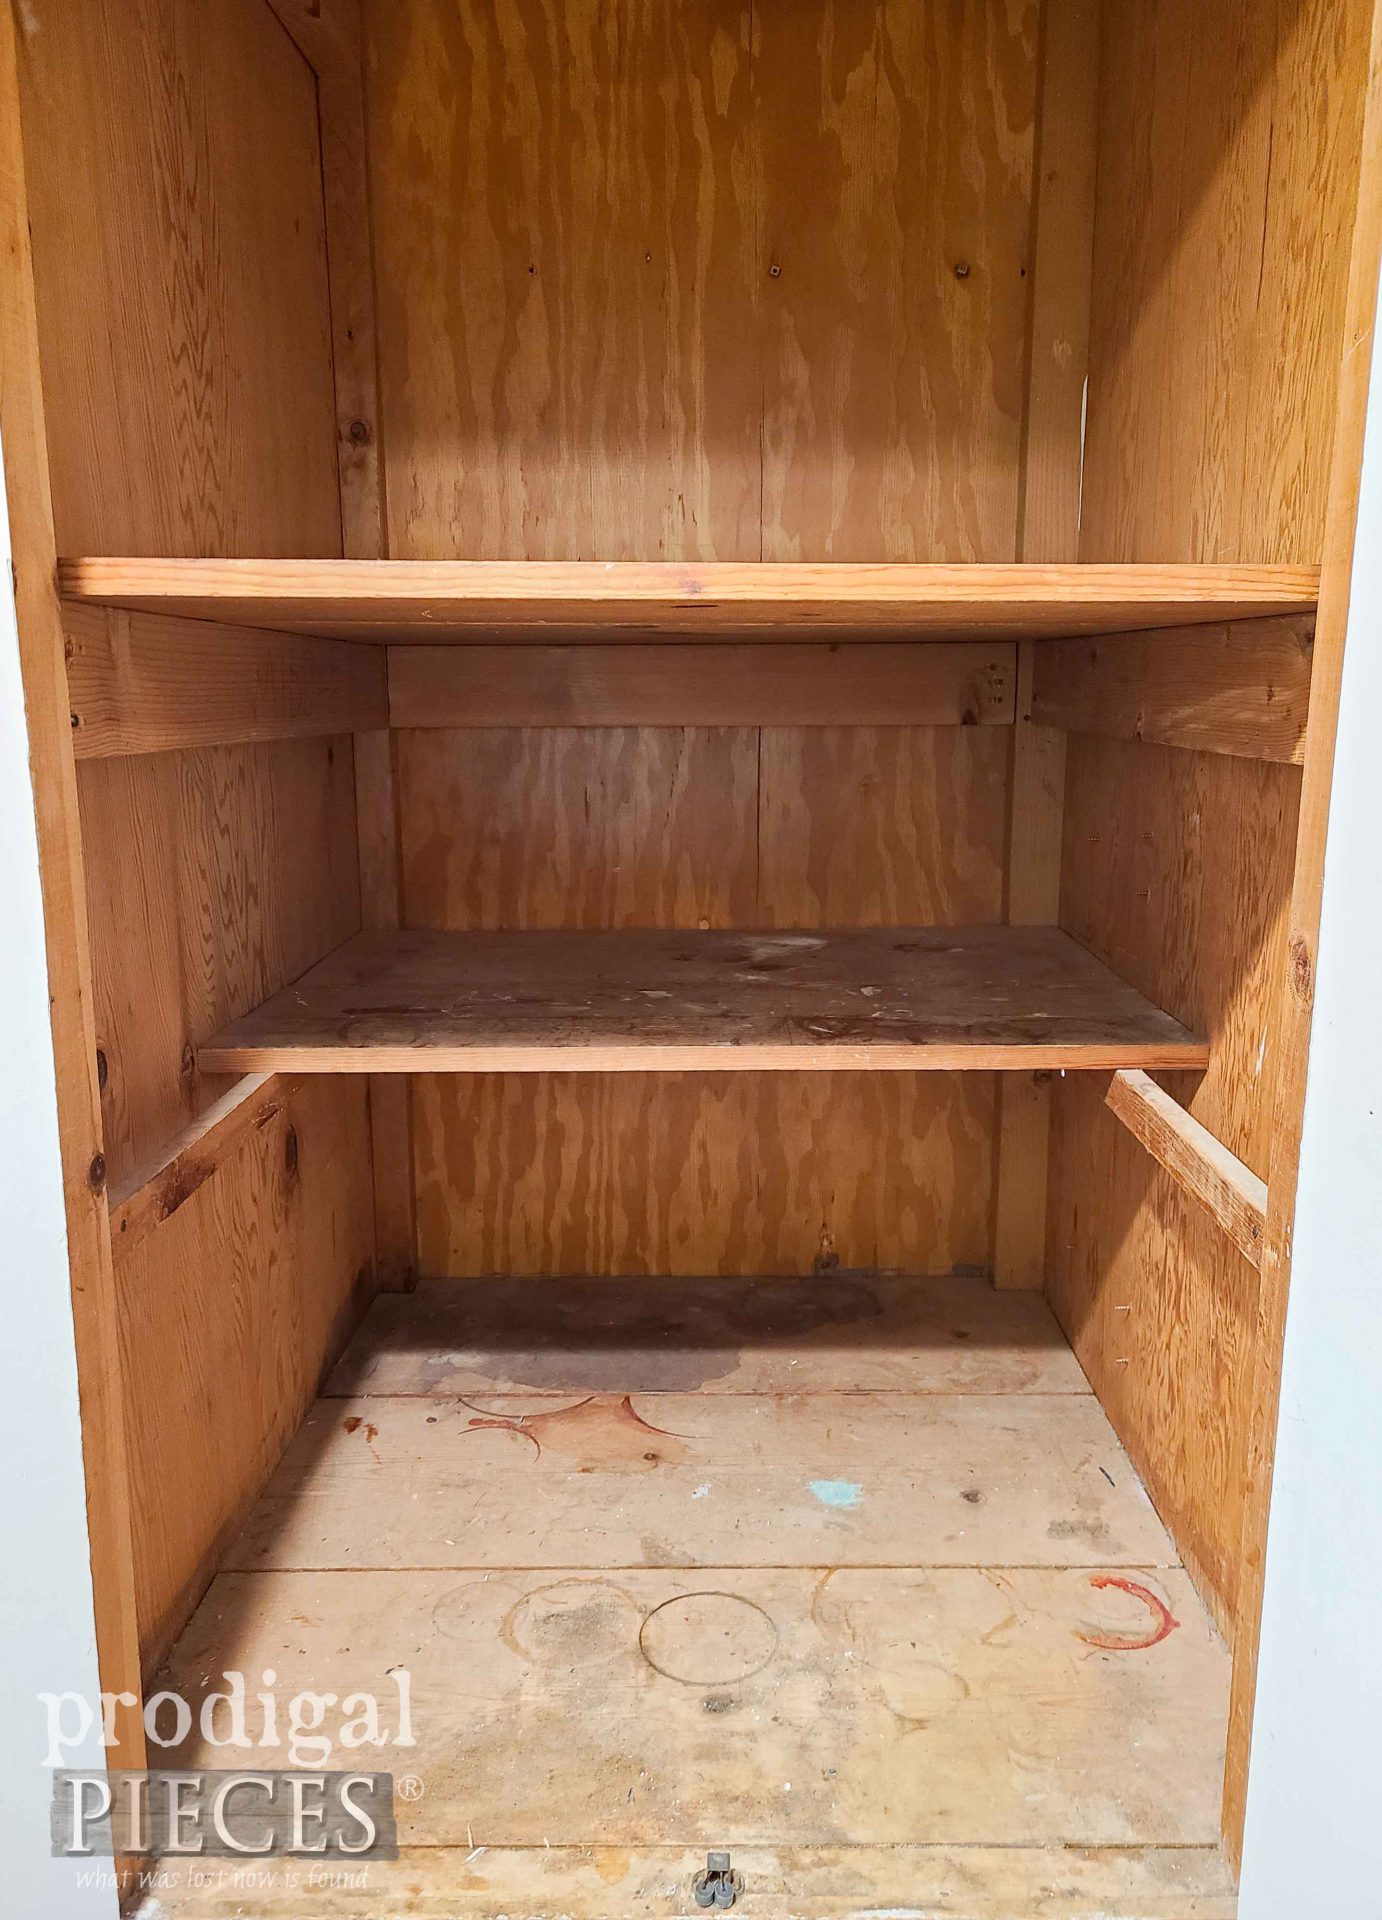 Empty Closet Before Update and Upgrade | prodigalpieces.com 